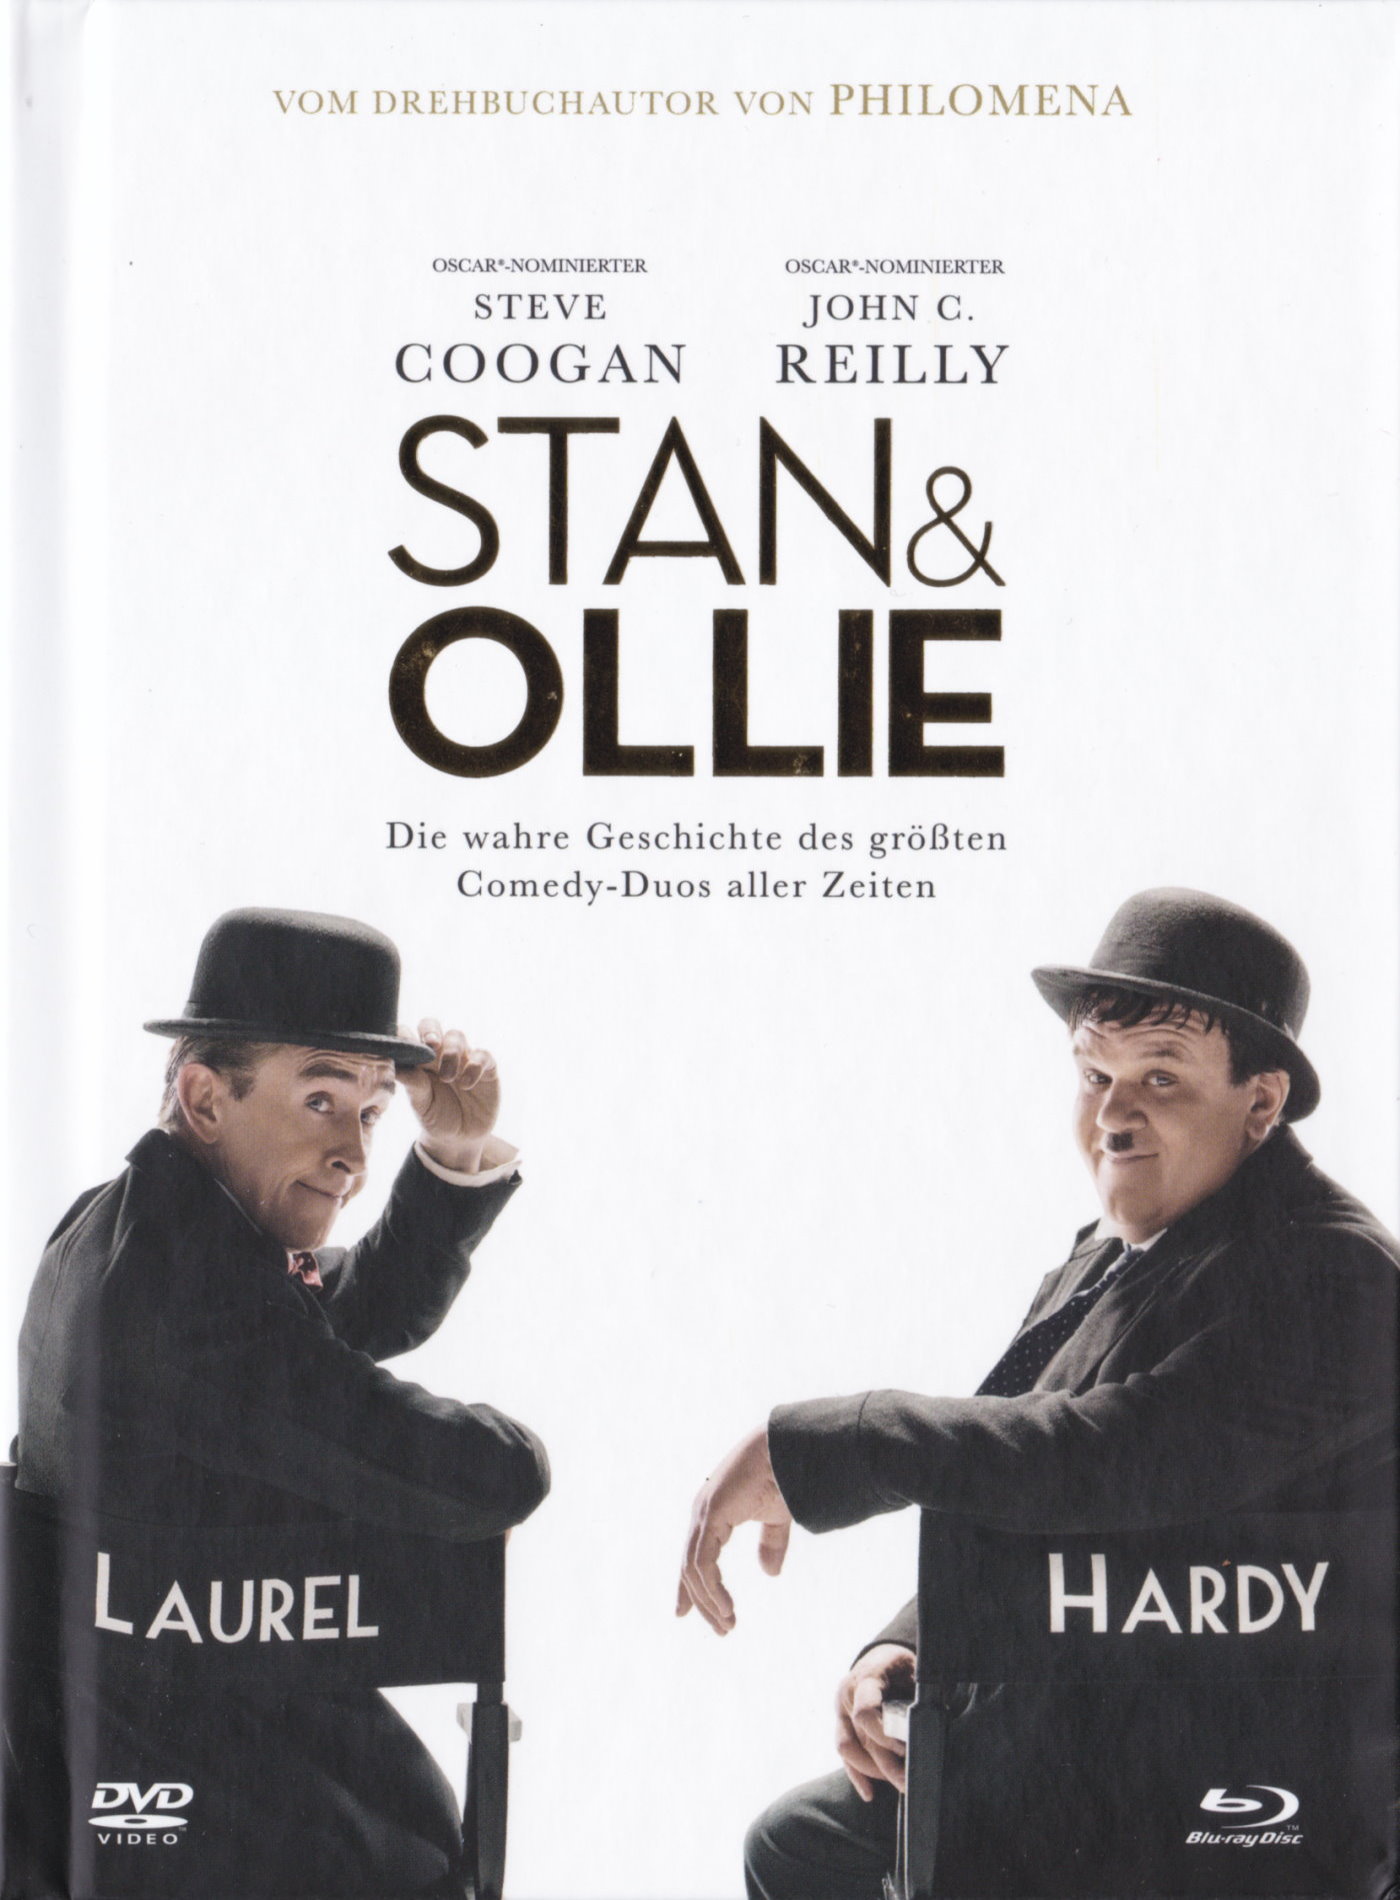 Cover - Stan & Ollie.jpg